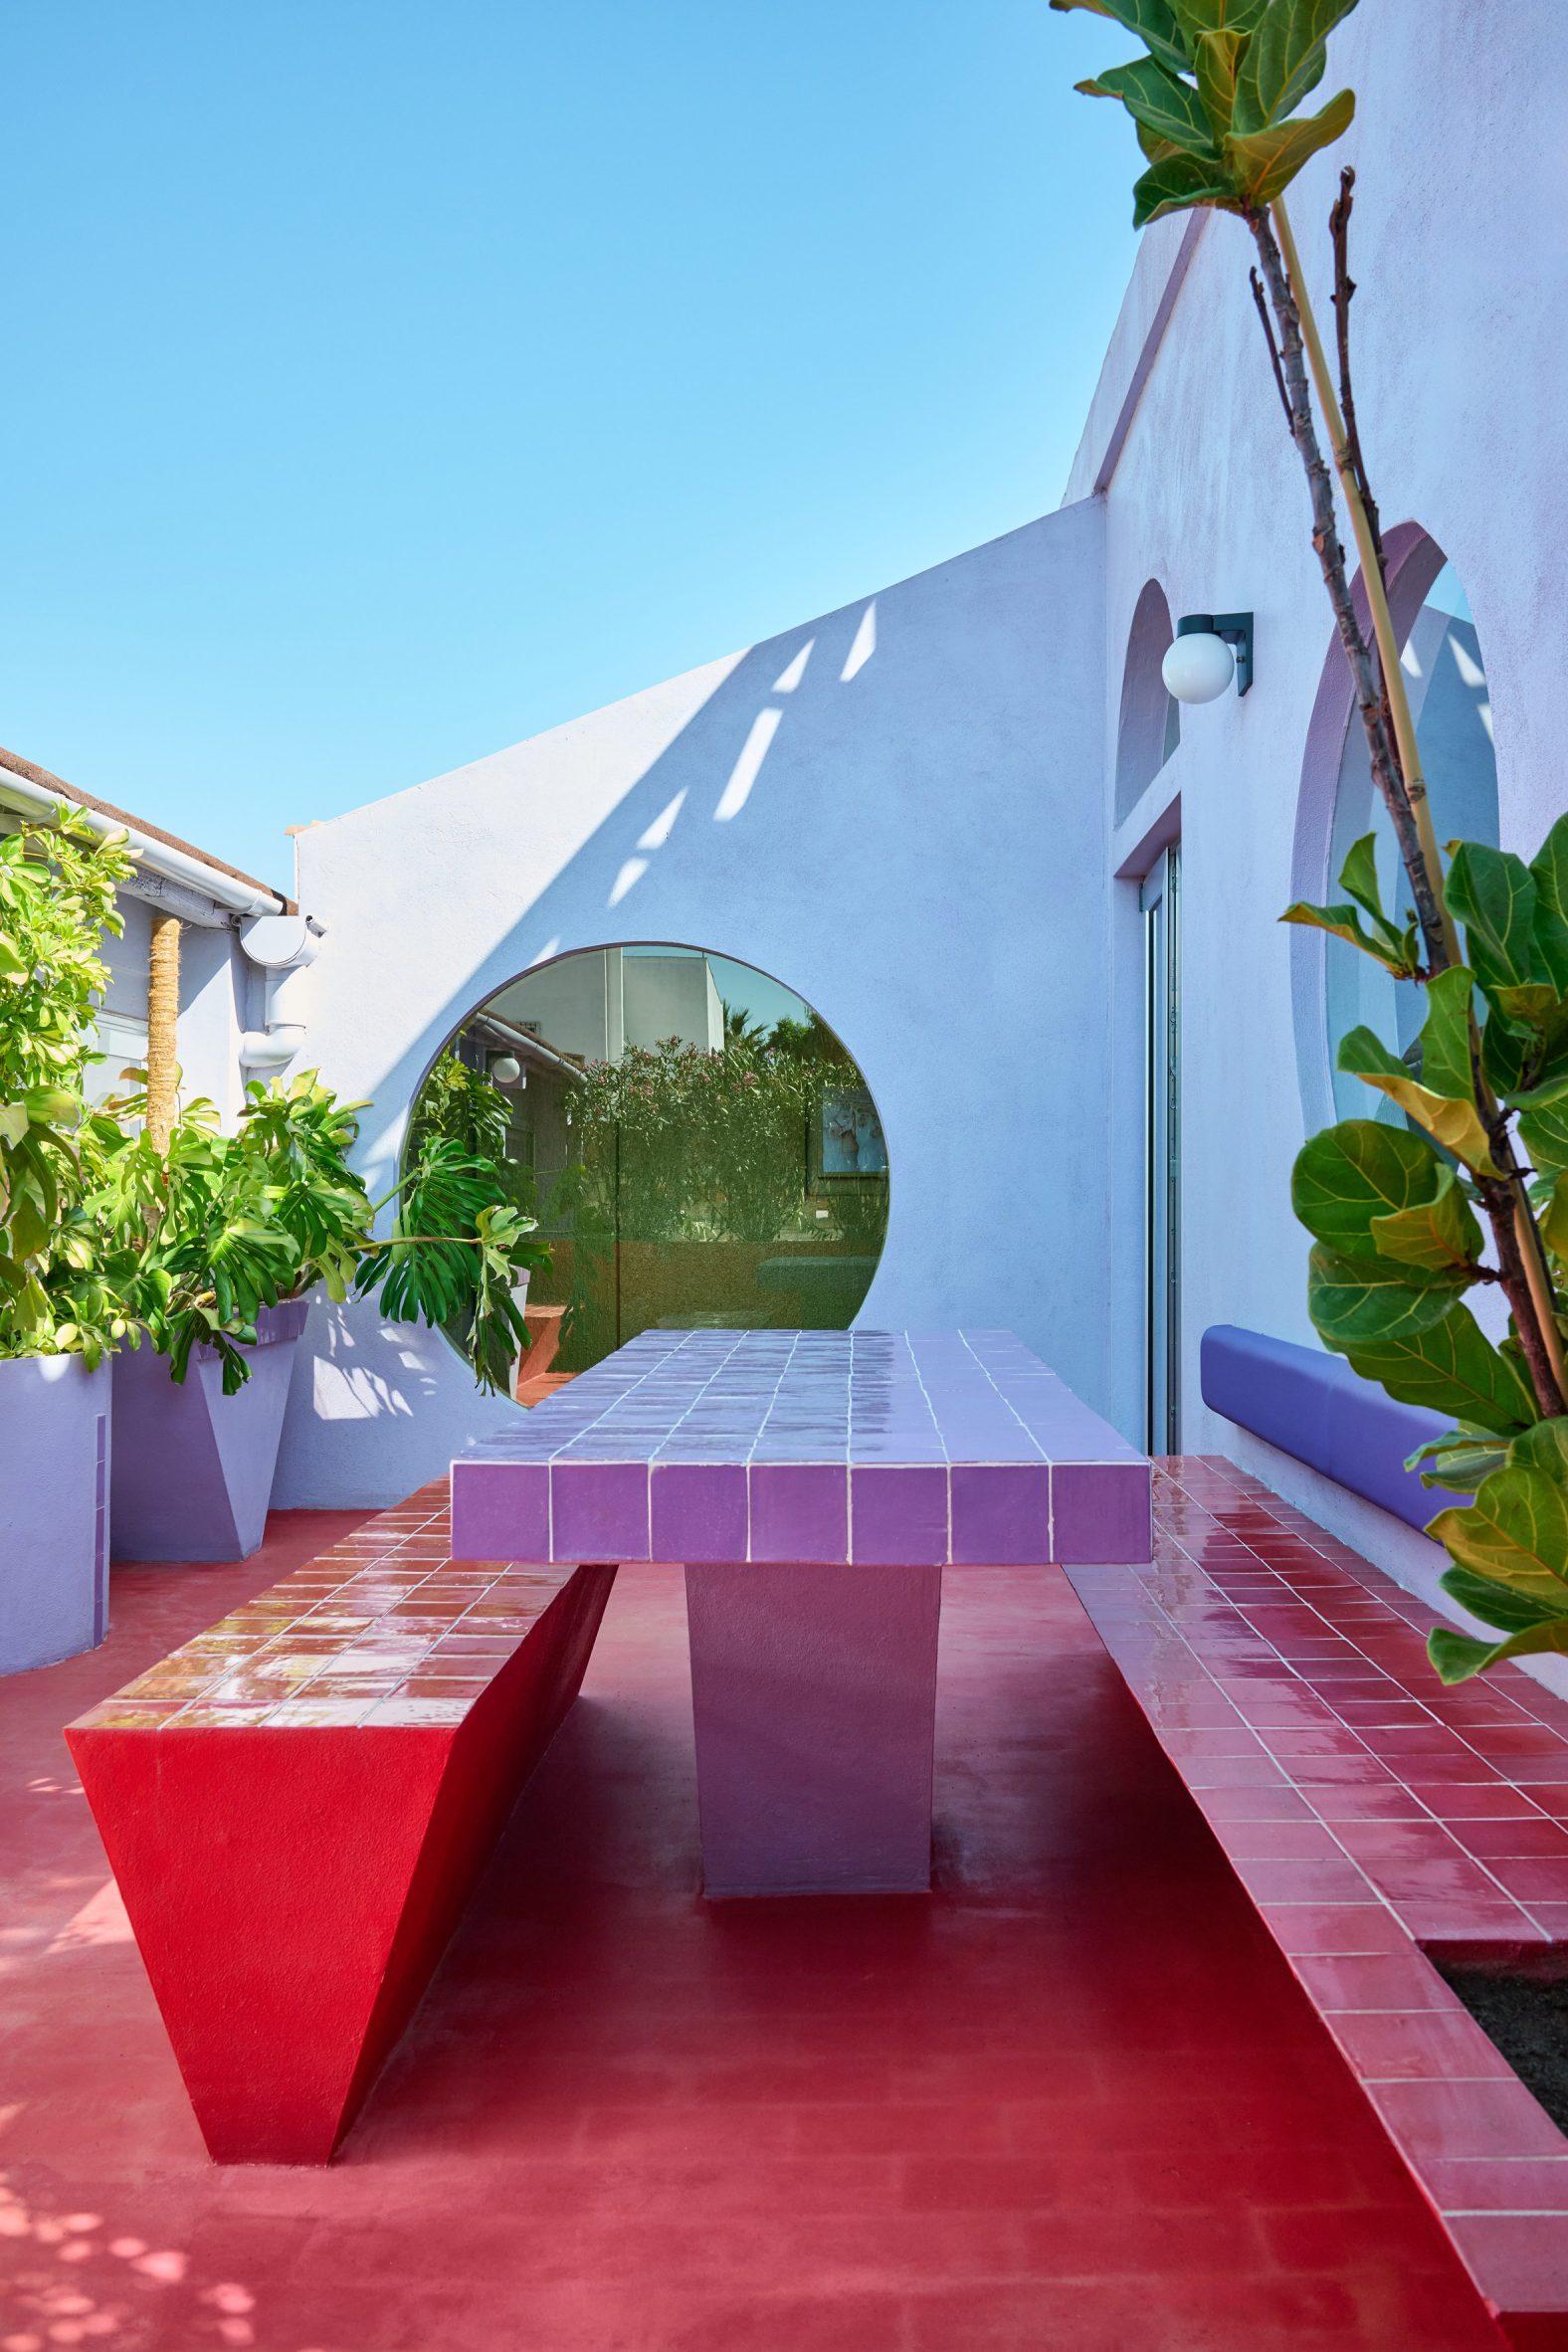 Colourful terrace with geometric furniture